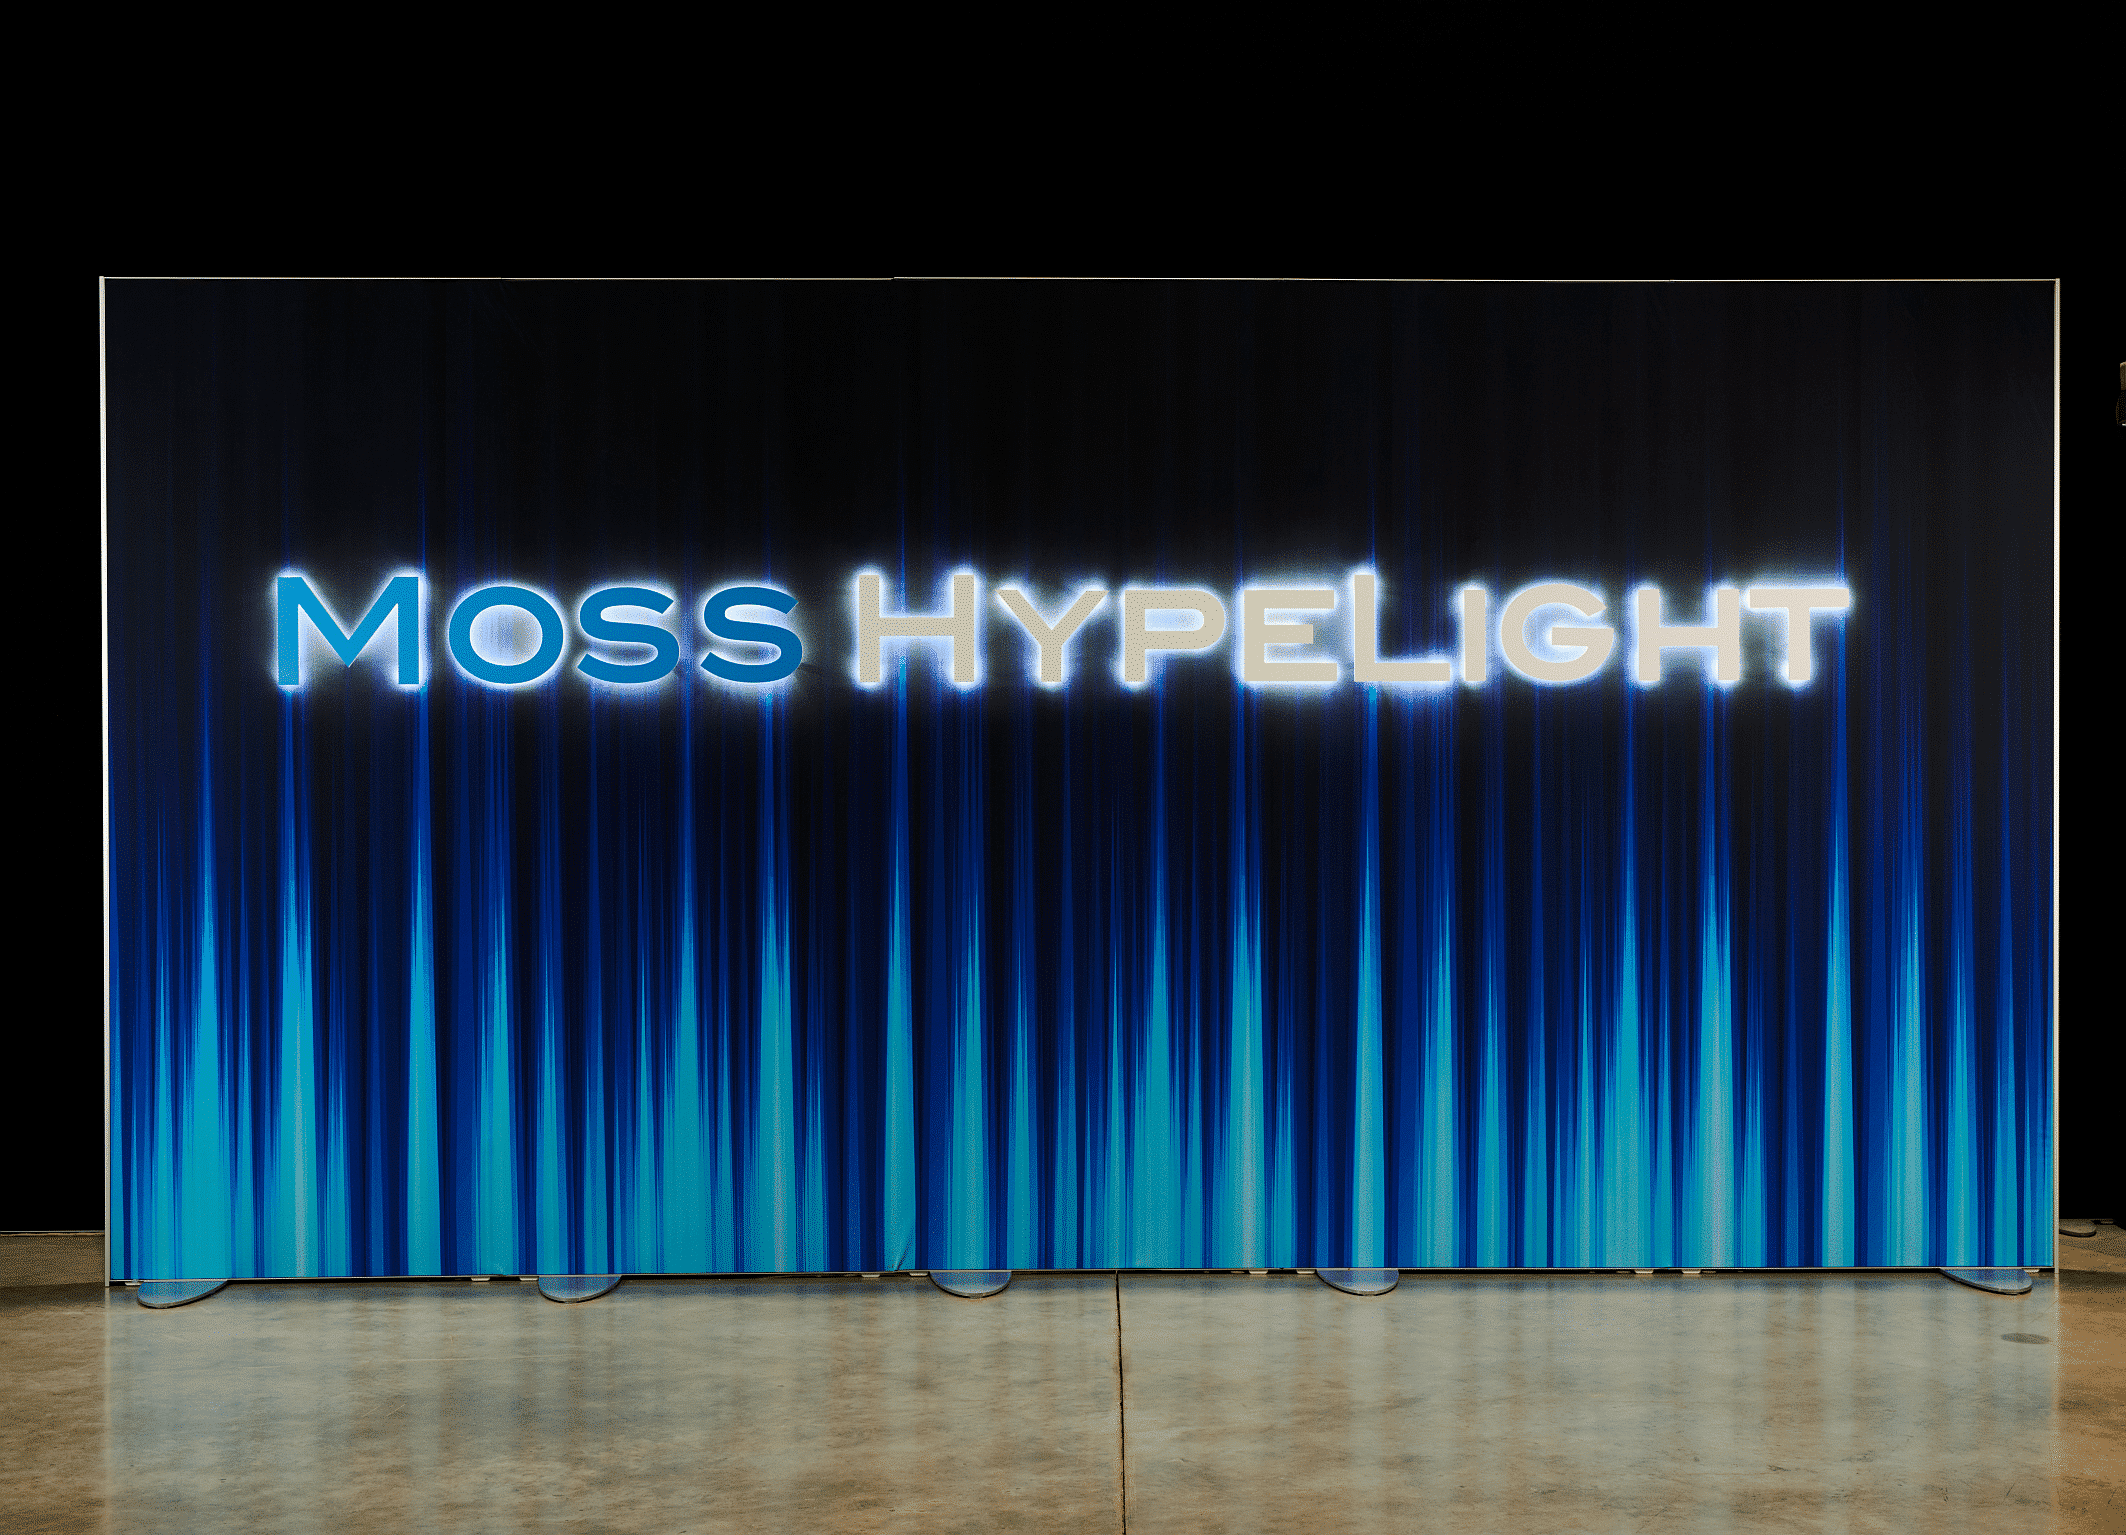 Moss hypelight Dimensional Illumination product